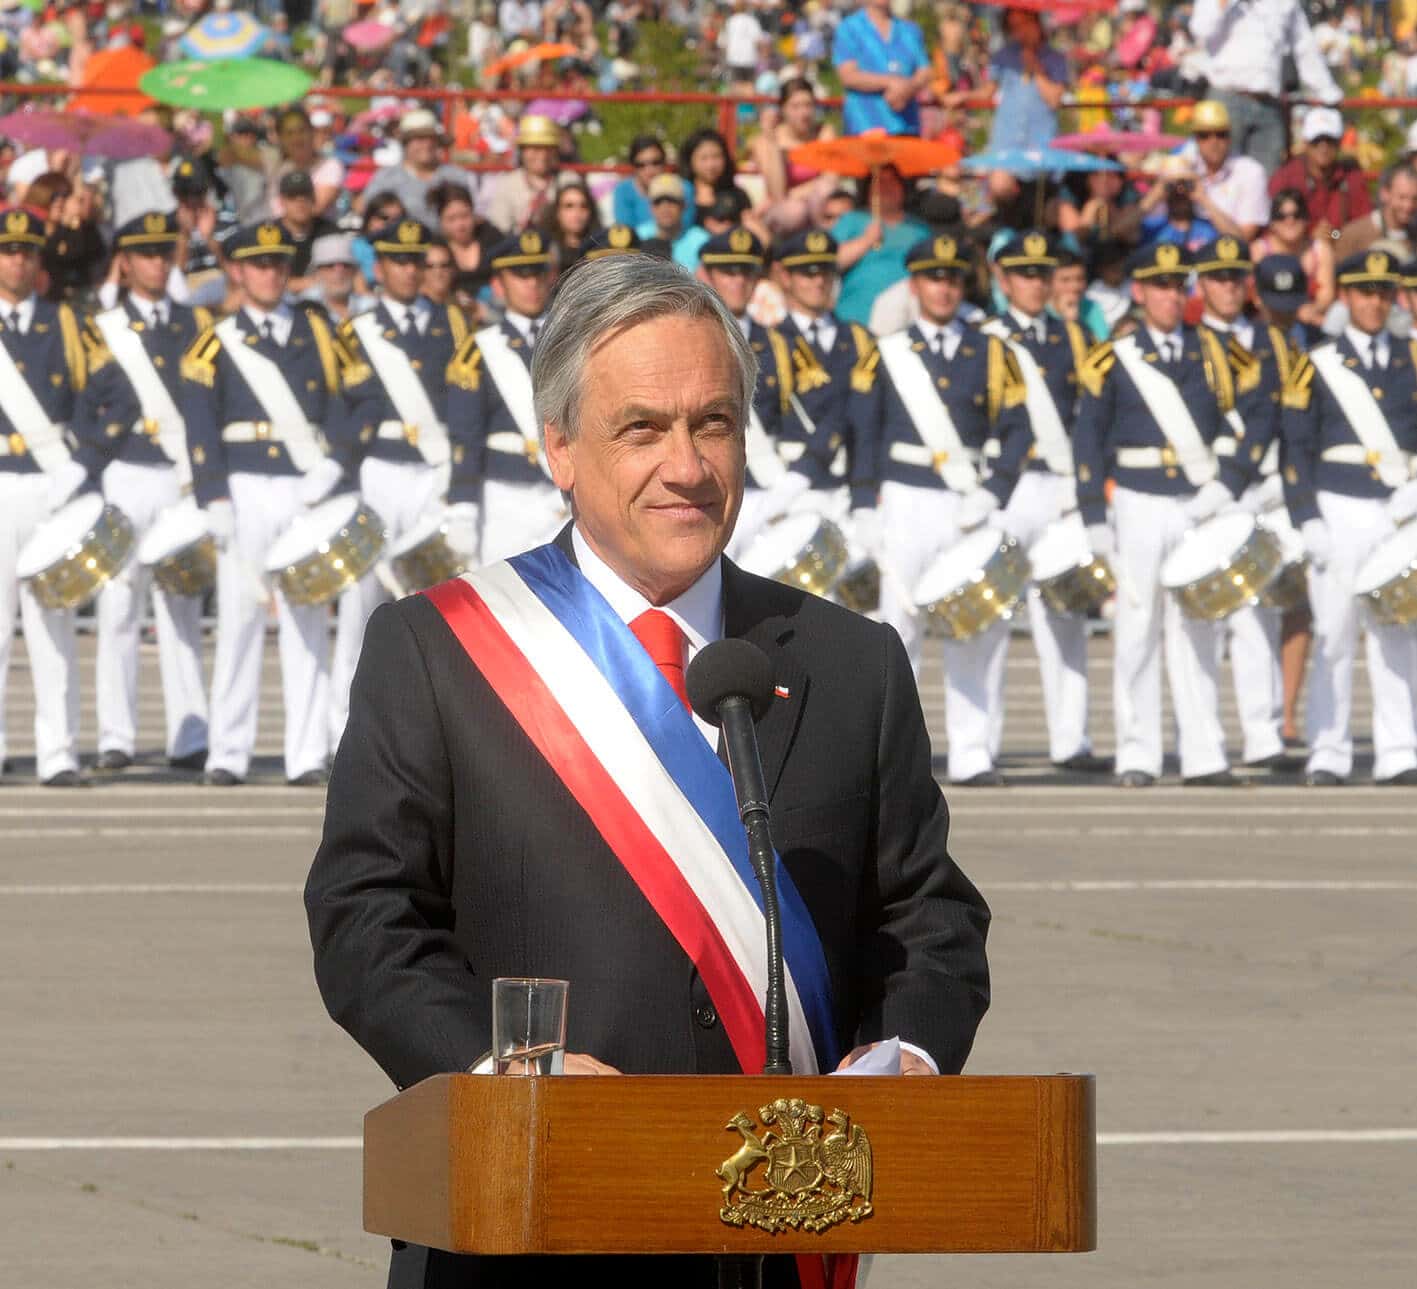 Miguel Juan Sebastián Piñera Echenique